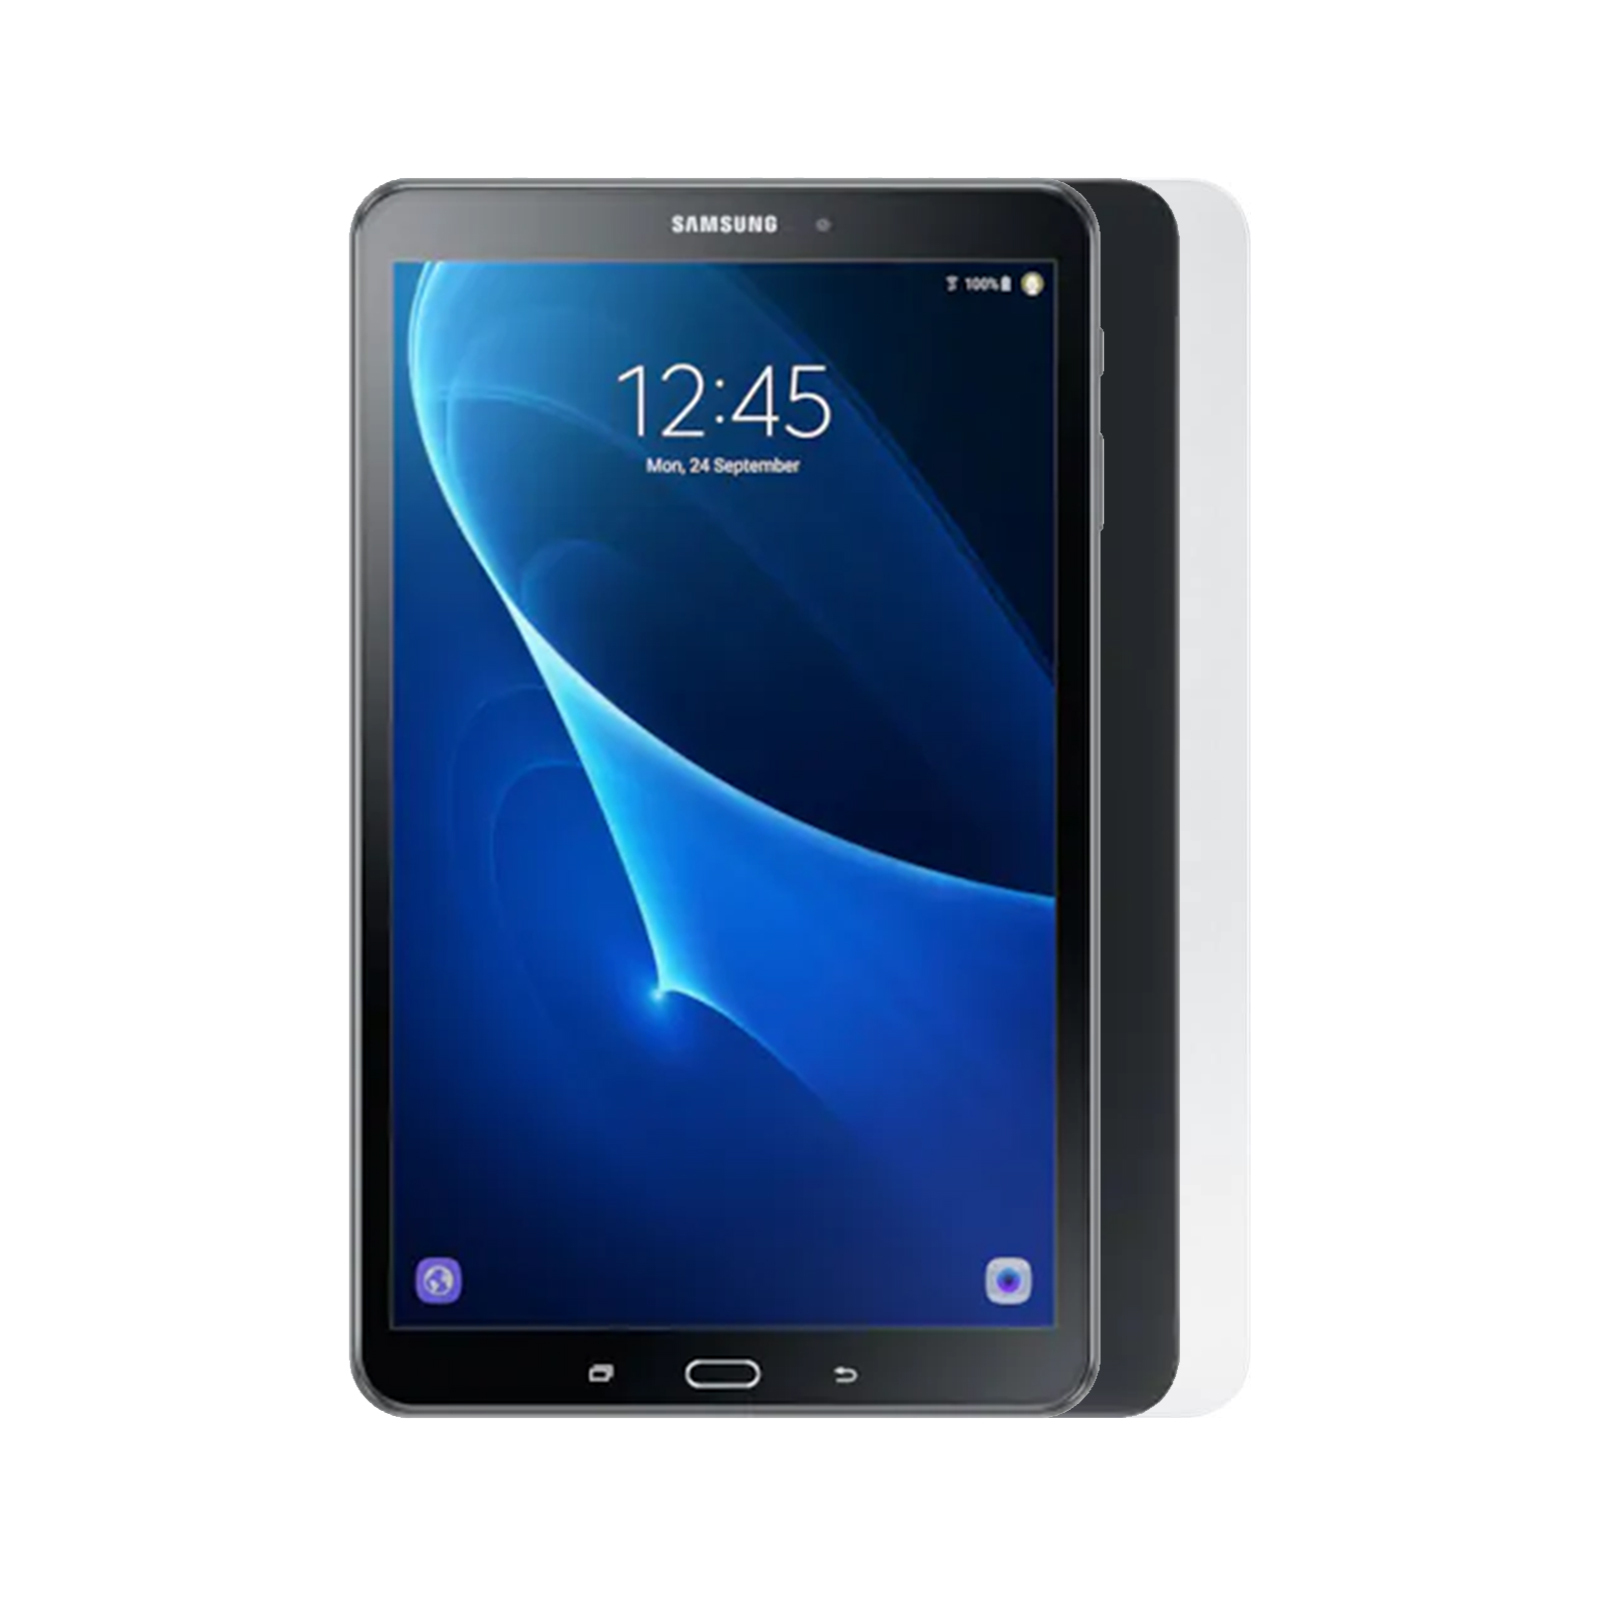 Samsung Galaxy Tab A 10.1 T580 - Very Good Condition